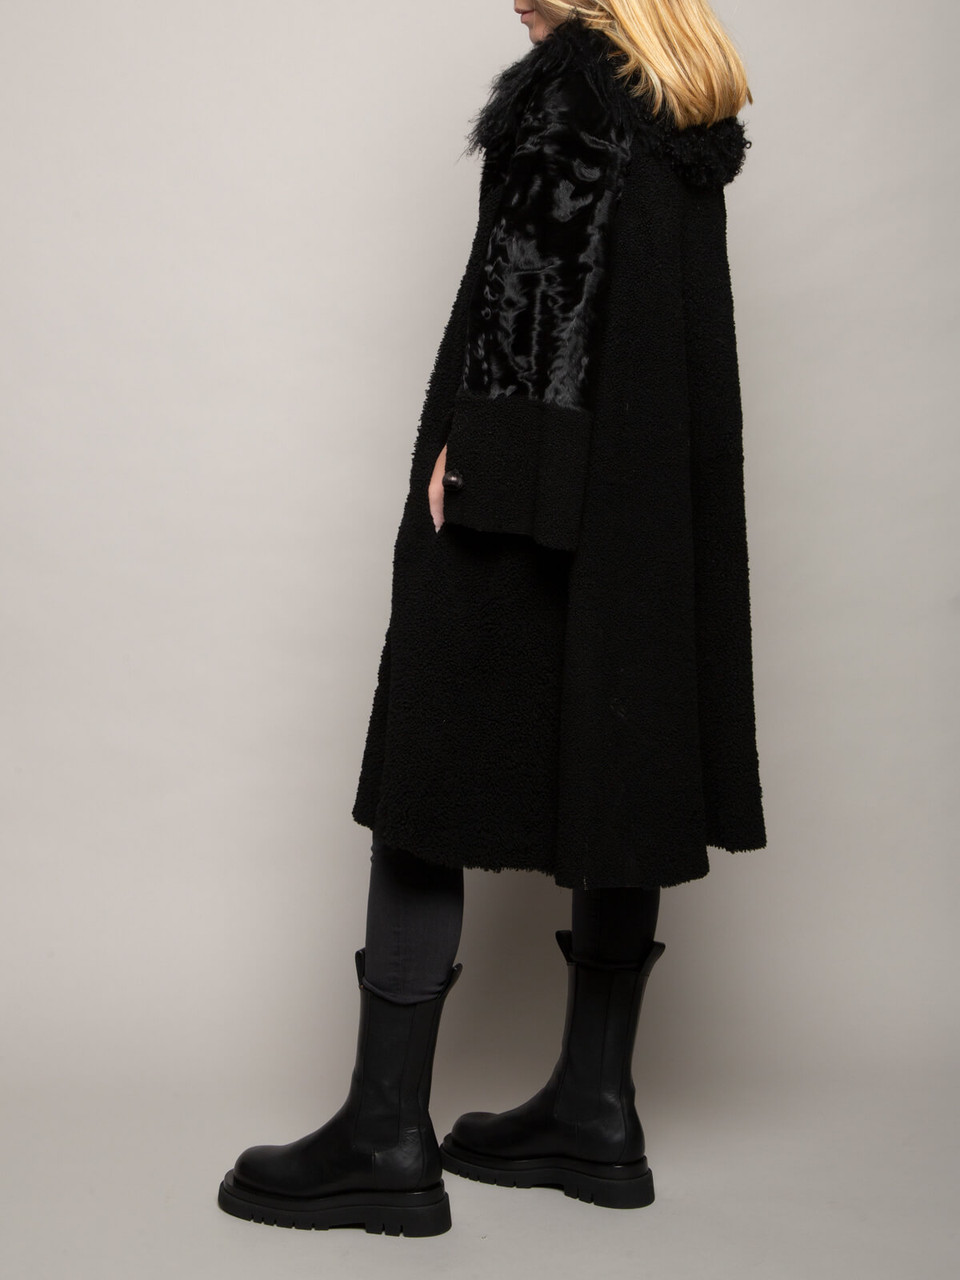 Hockley Women's Coat with Fur Collar, Size 12 UK, Black Silk